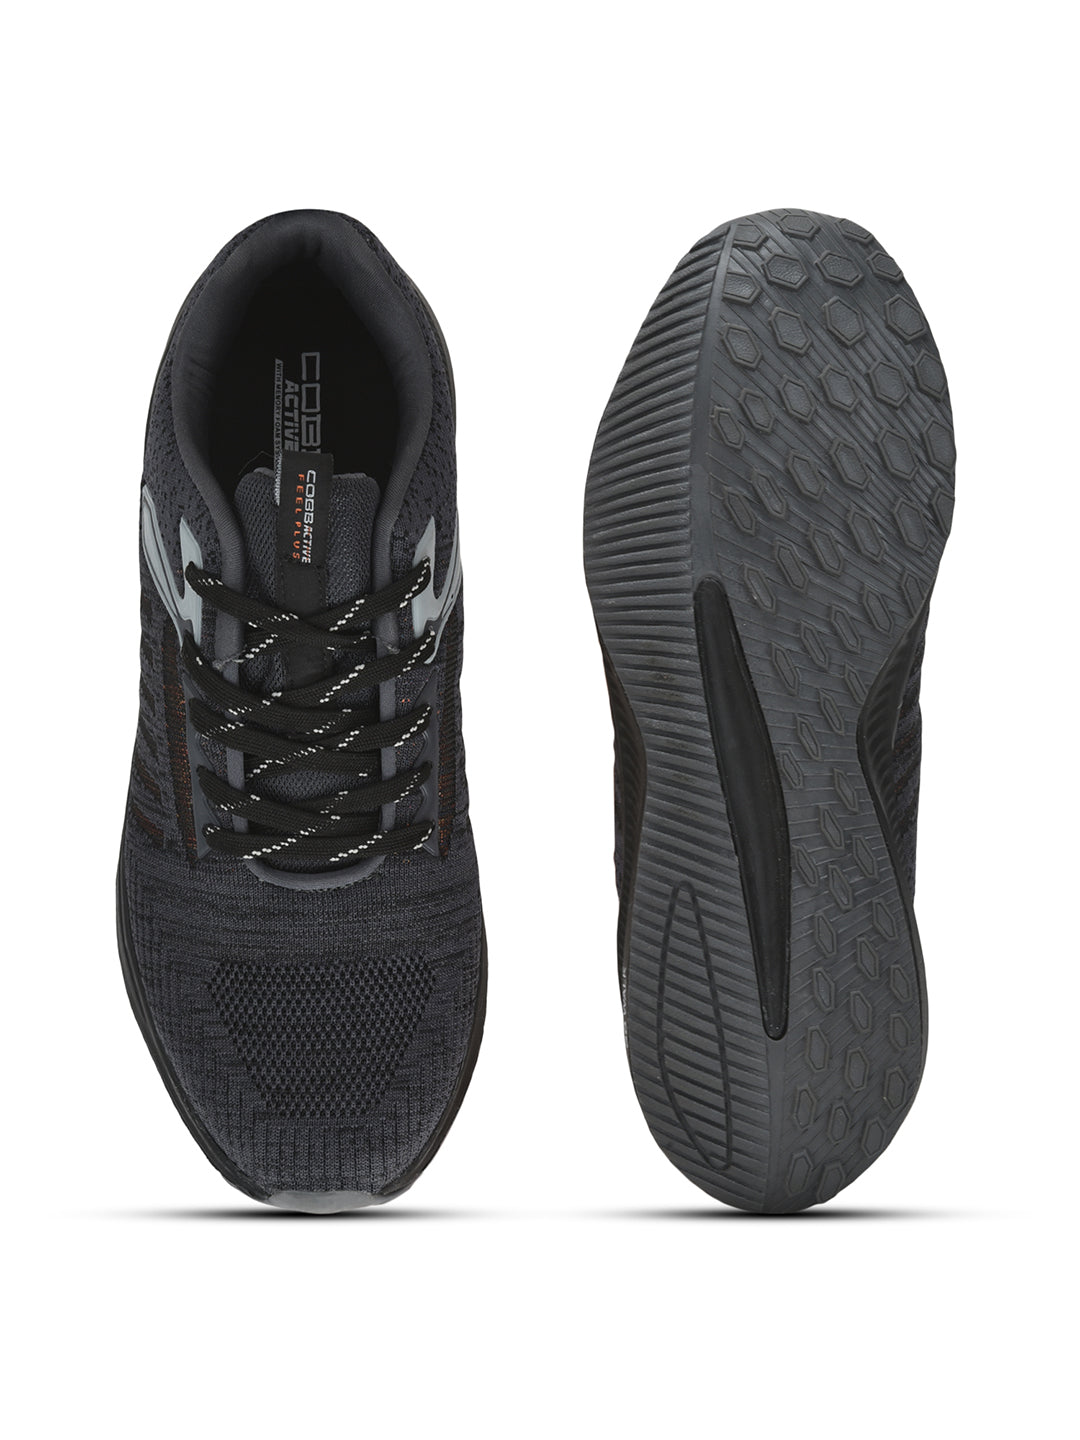 VANS Men's Athletic Sneakers High Top Dark Grey Suede Size 7.5 Lace Up  Great | eBay